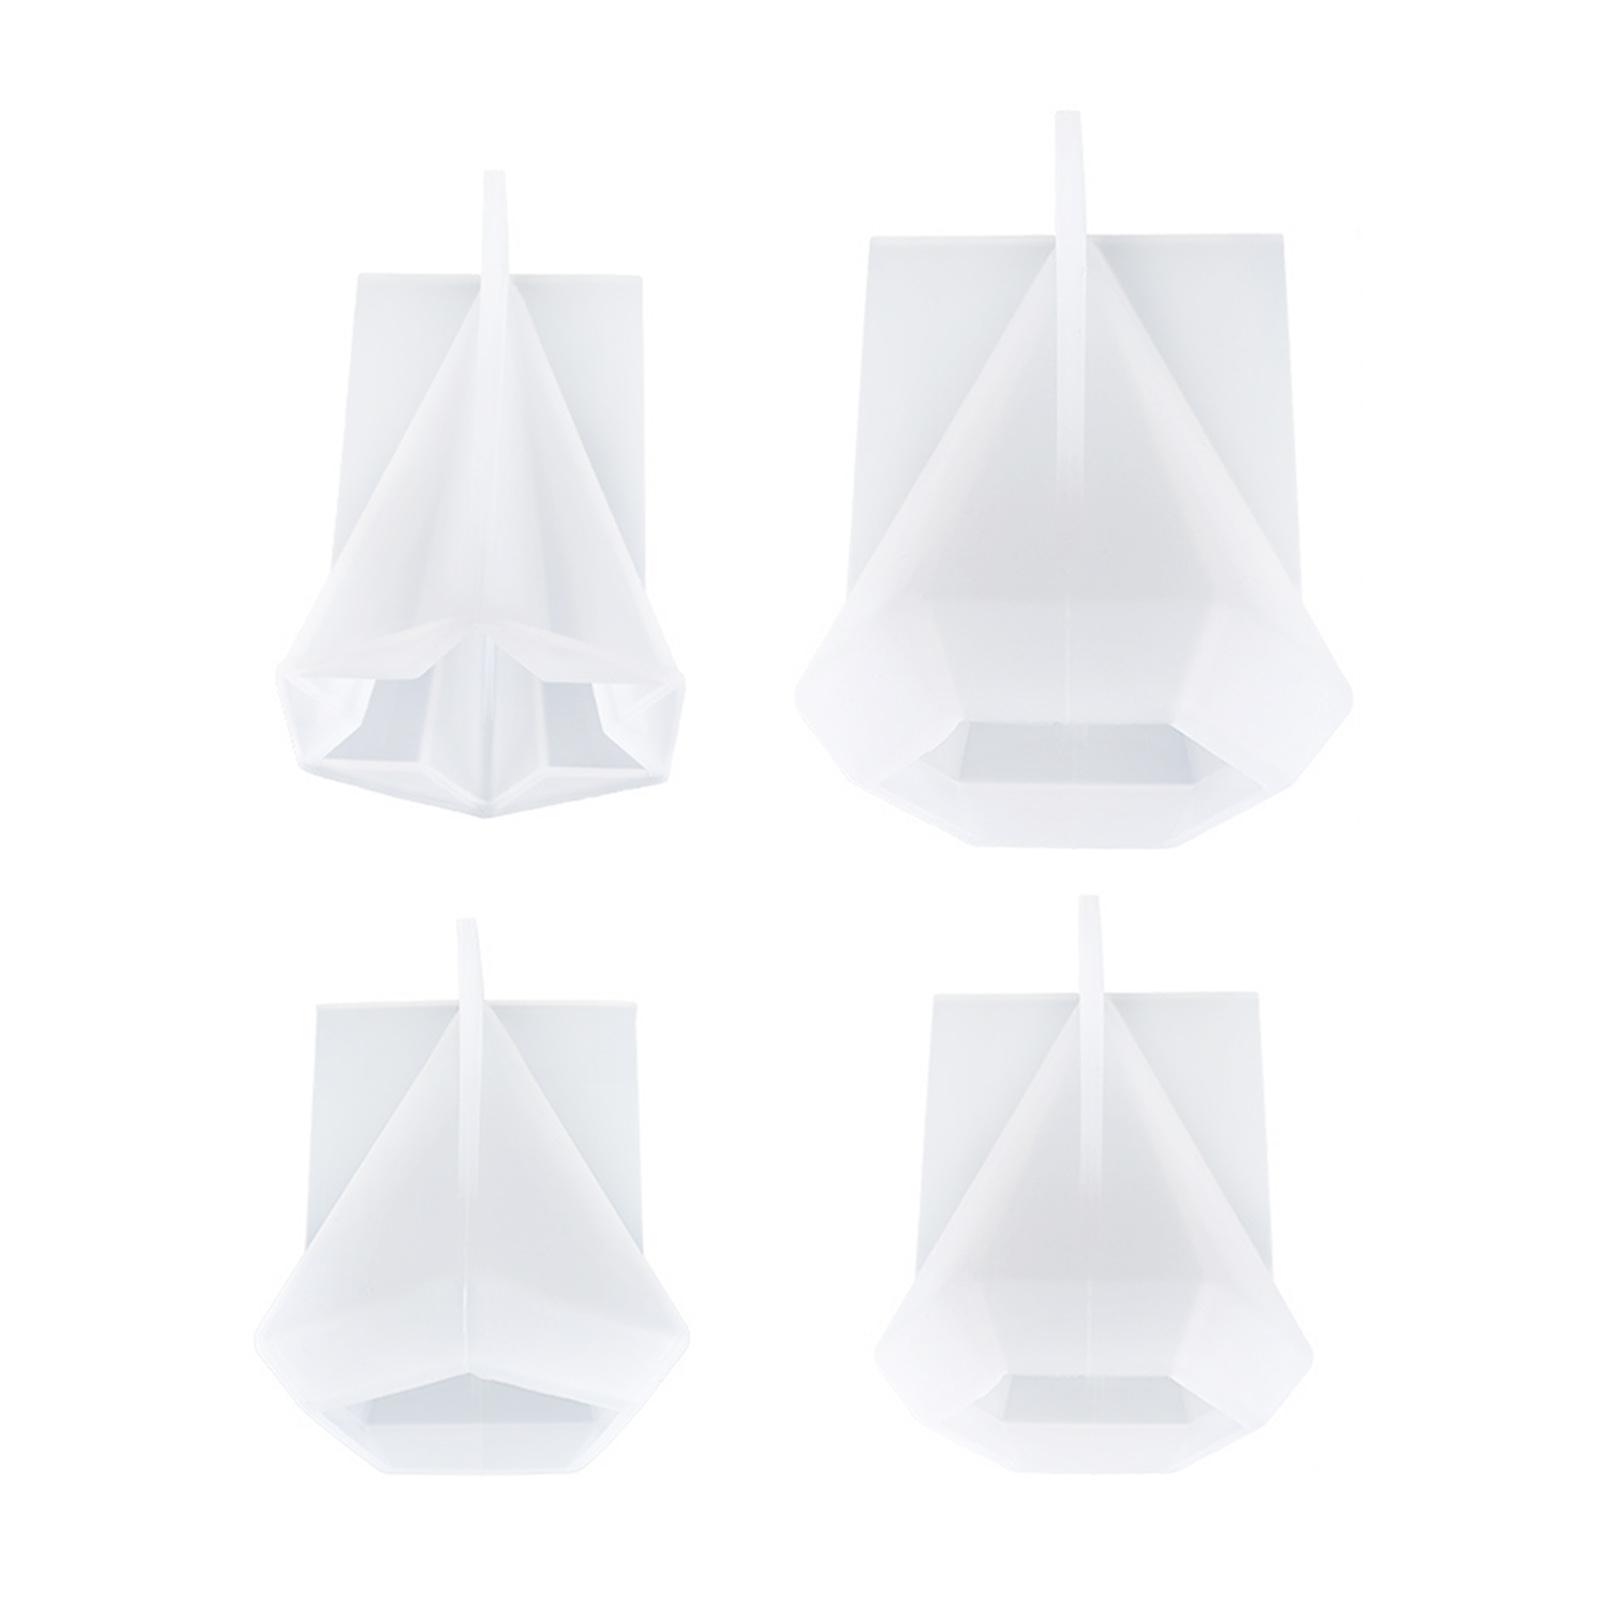 3Pcs Ring Cone Resin Mold, Shaped Holder Molds For Pyramid Silicone Epoxy  Resin, Wedding Decor, Engagement Gift - Yahoo Shopping